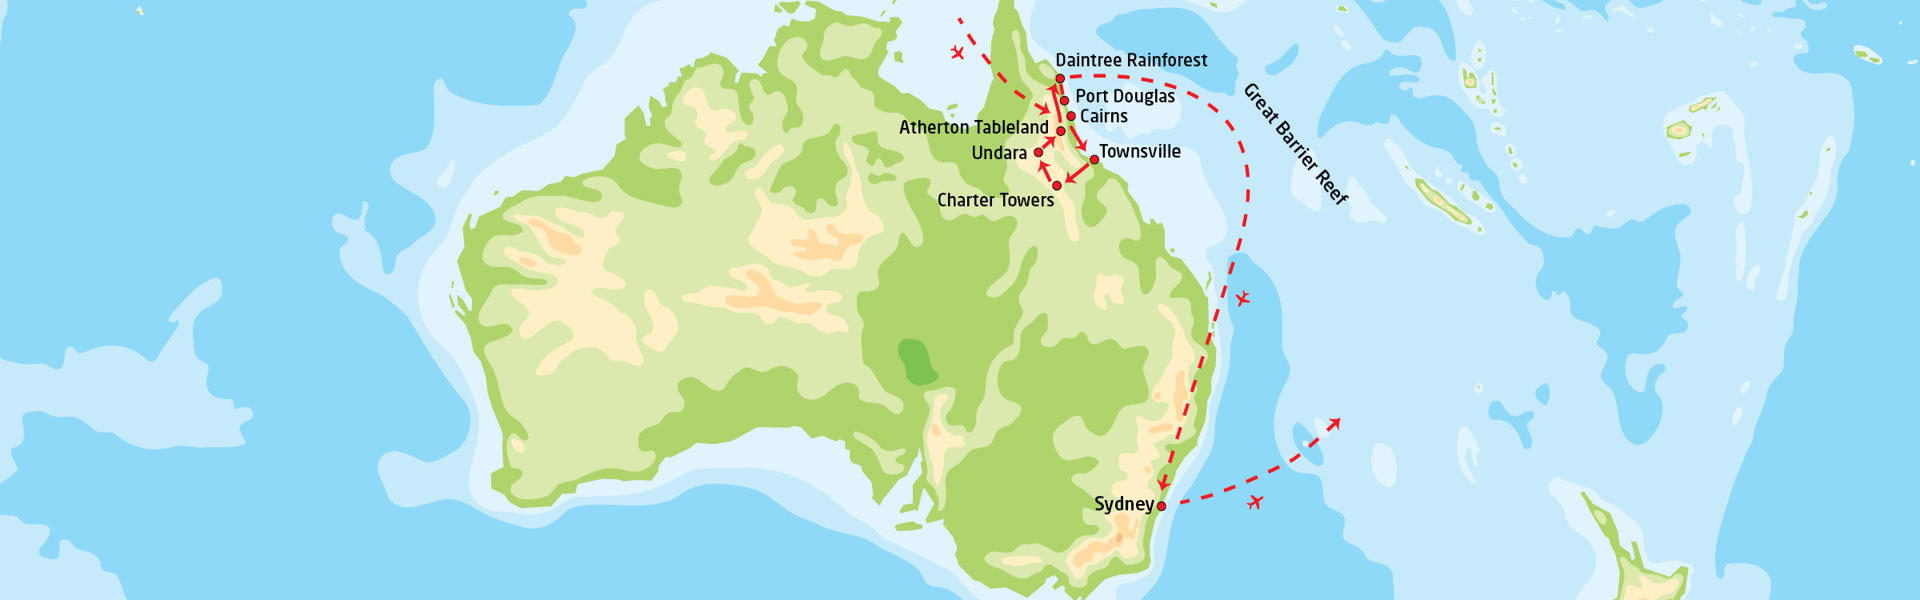 Sydney & bilferie i Australias tropiske nord | Reiserute